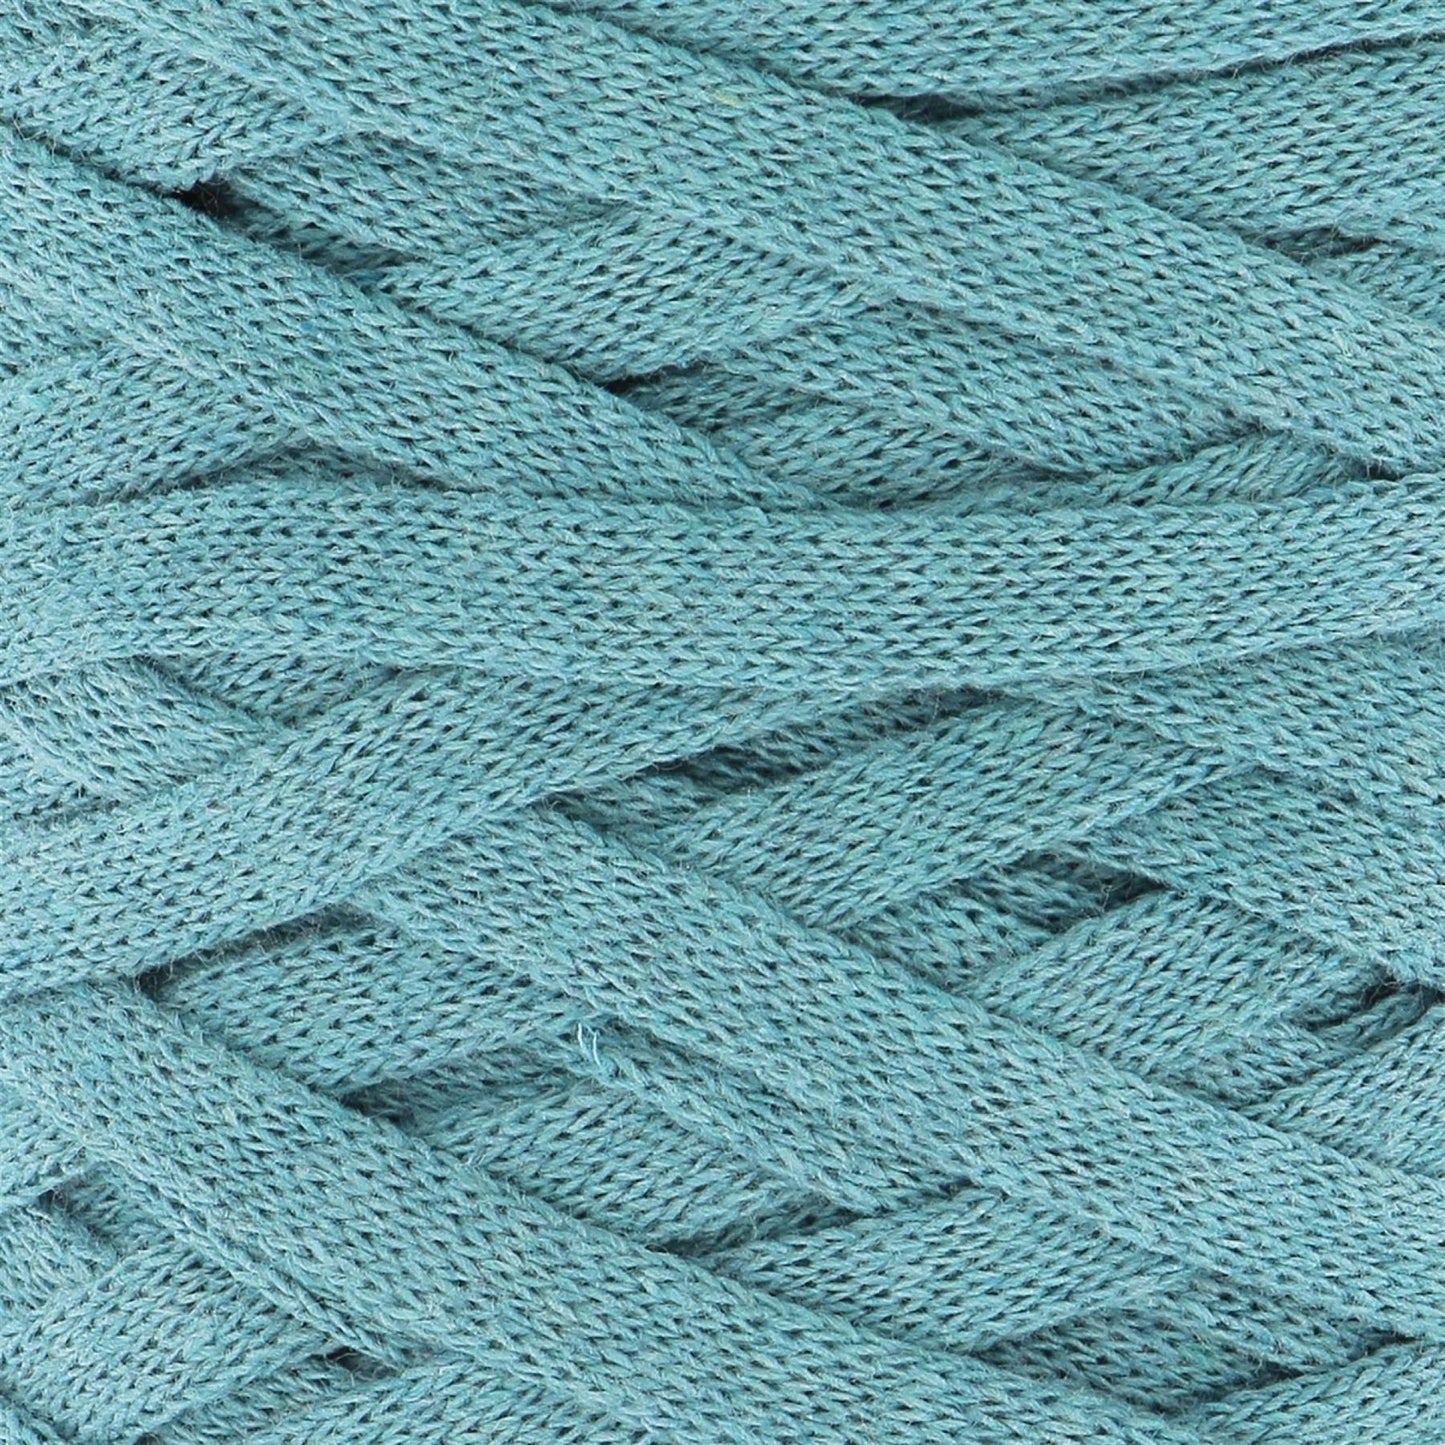 RXLSP9 RibbonXL Emerald Splash Cotton Yarn - 120M, 250g